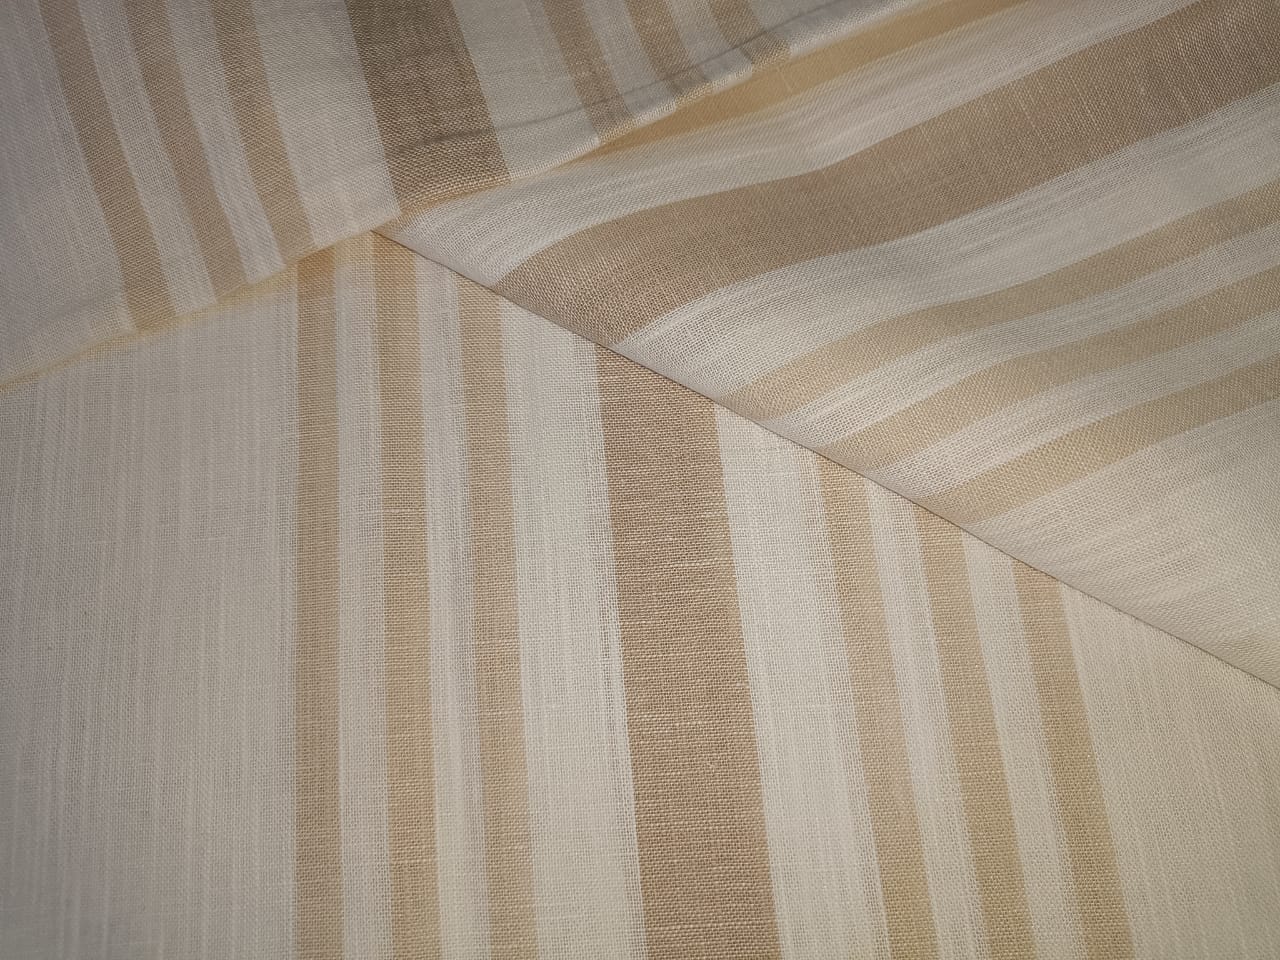 Linen 55% COTTON 45% Fabric 58" wide STRIPE [15418]